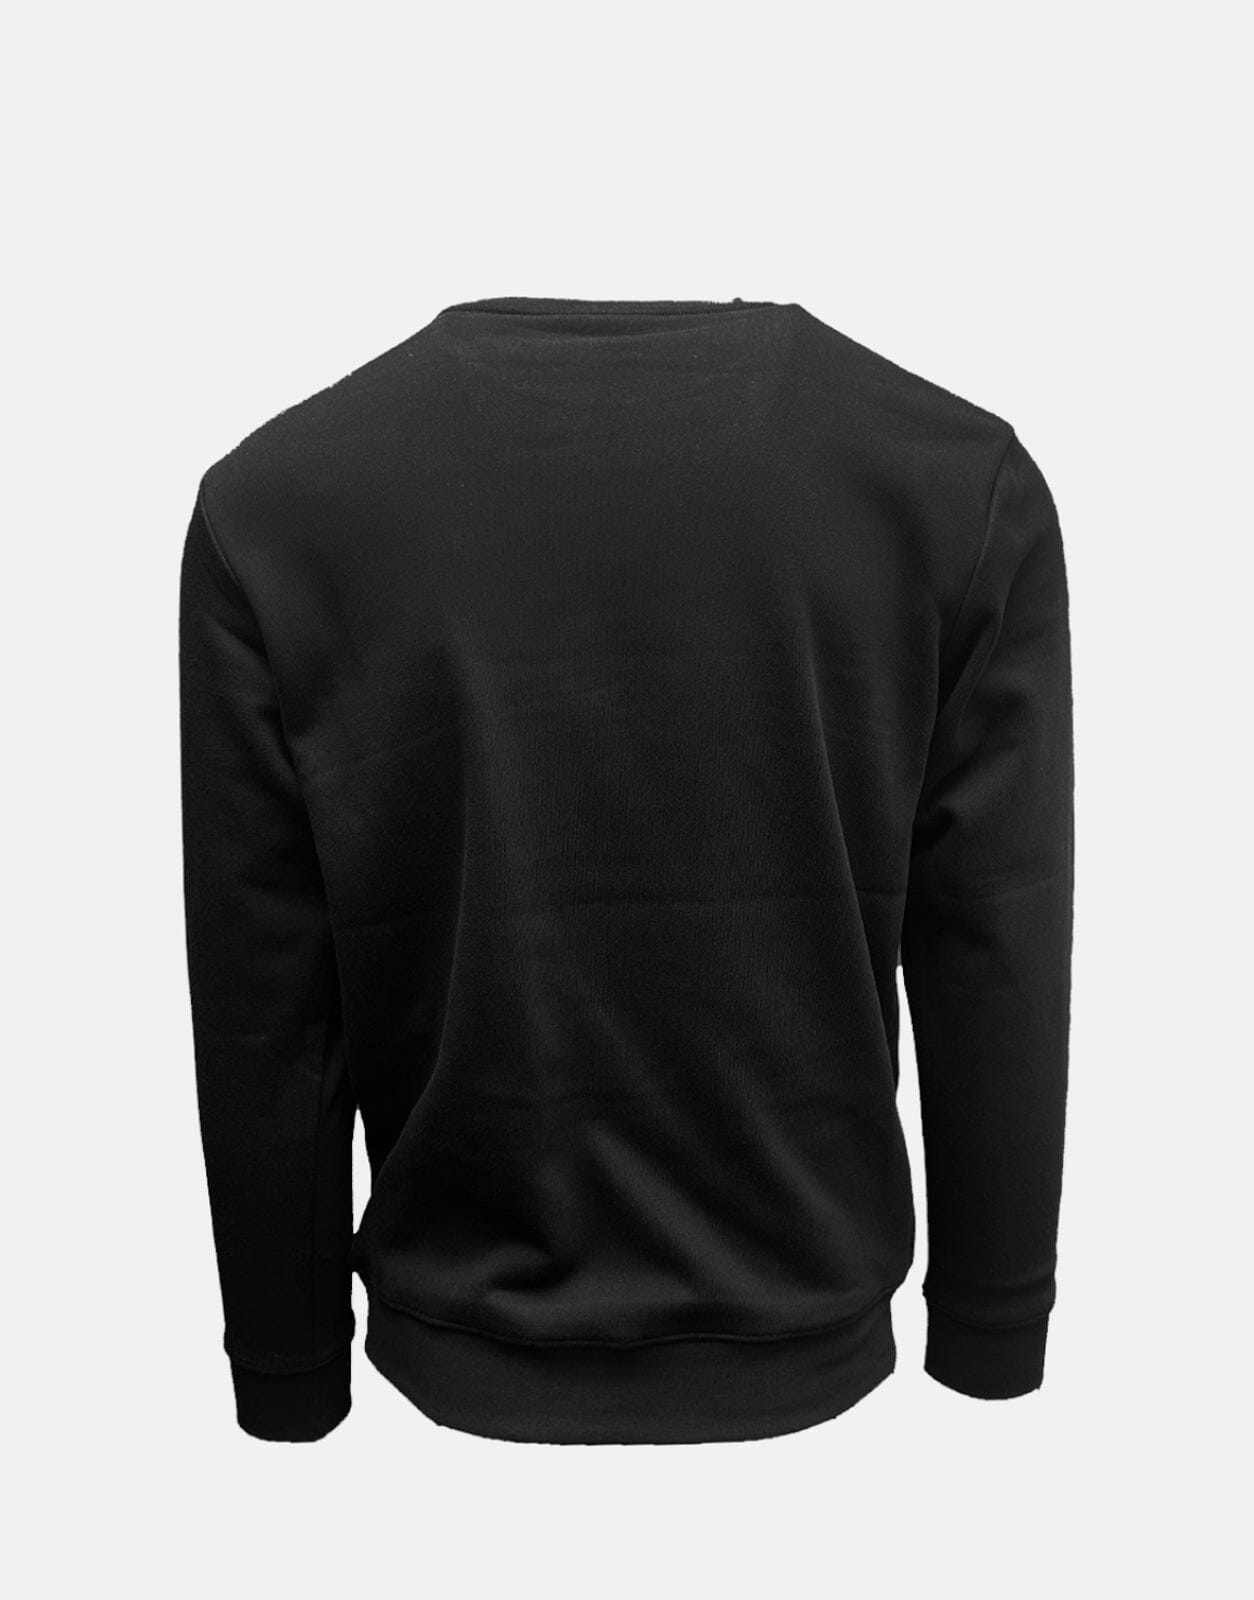 Vialli Glacker Black Sweatshirt - Subwear